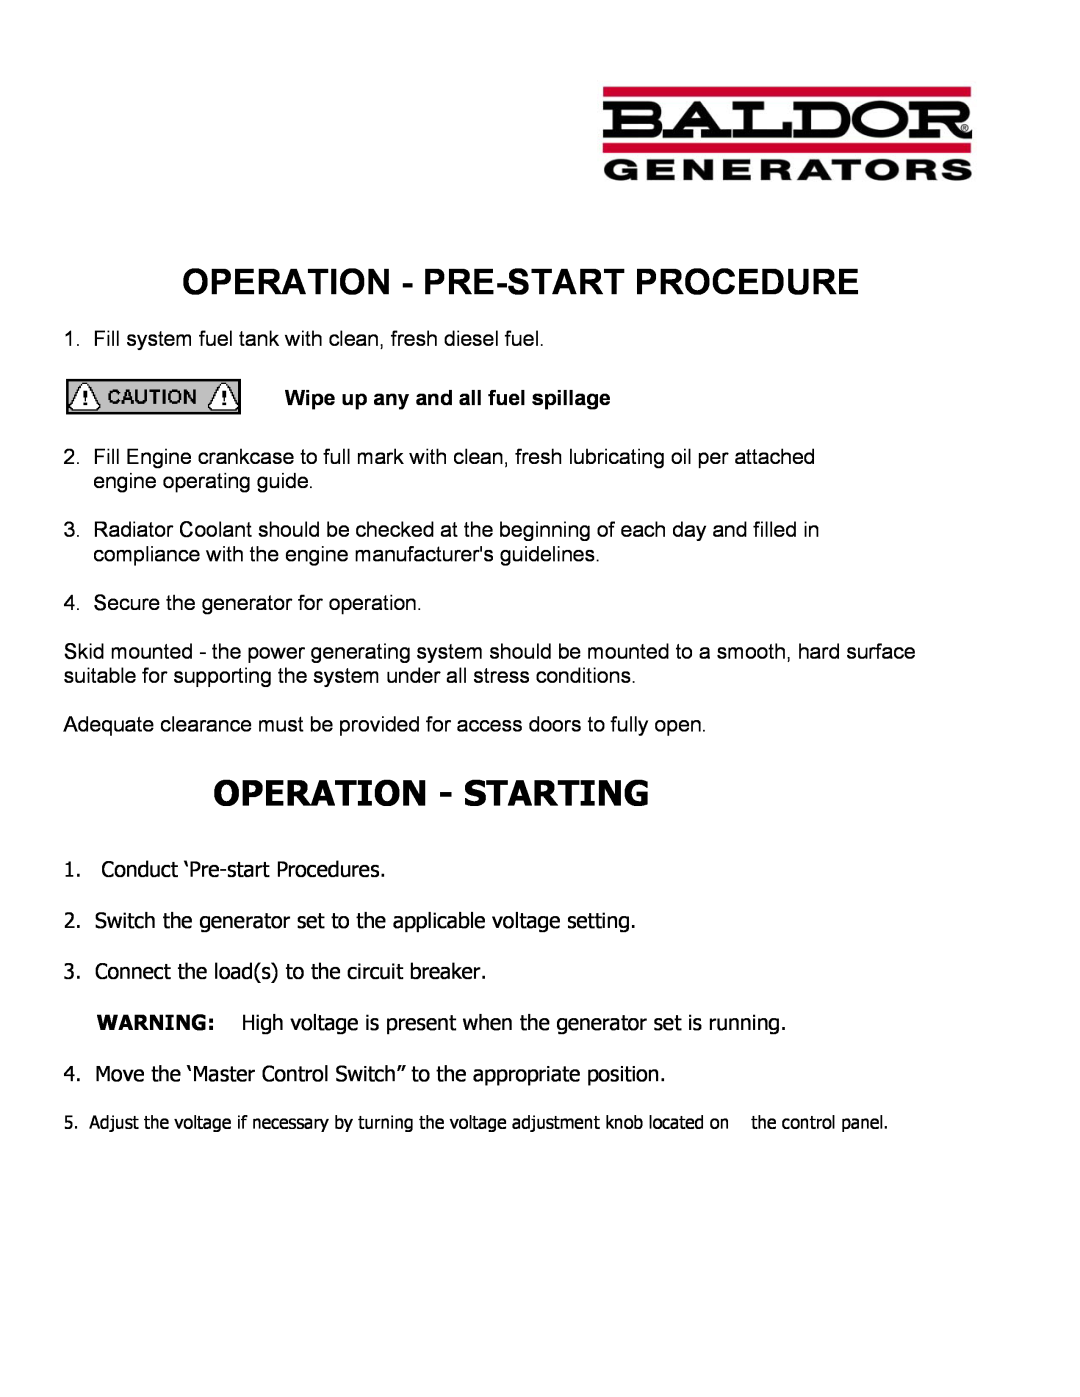 Baldor ISO9001 manual Operation - Pre-Start Procedure, Operation - Starting 